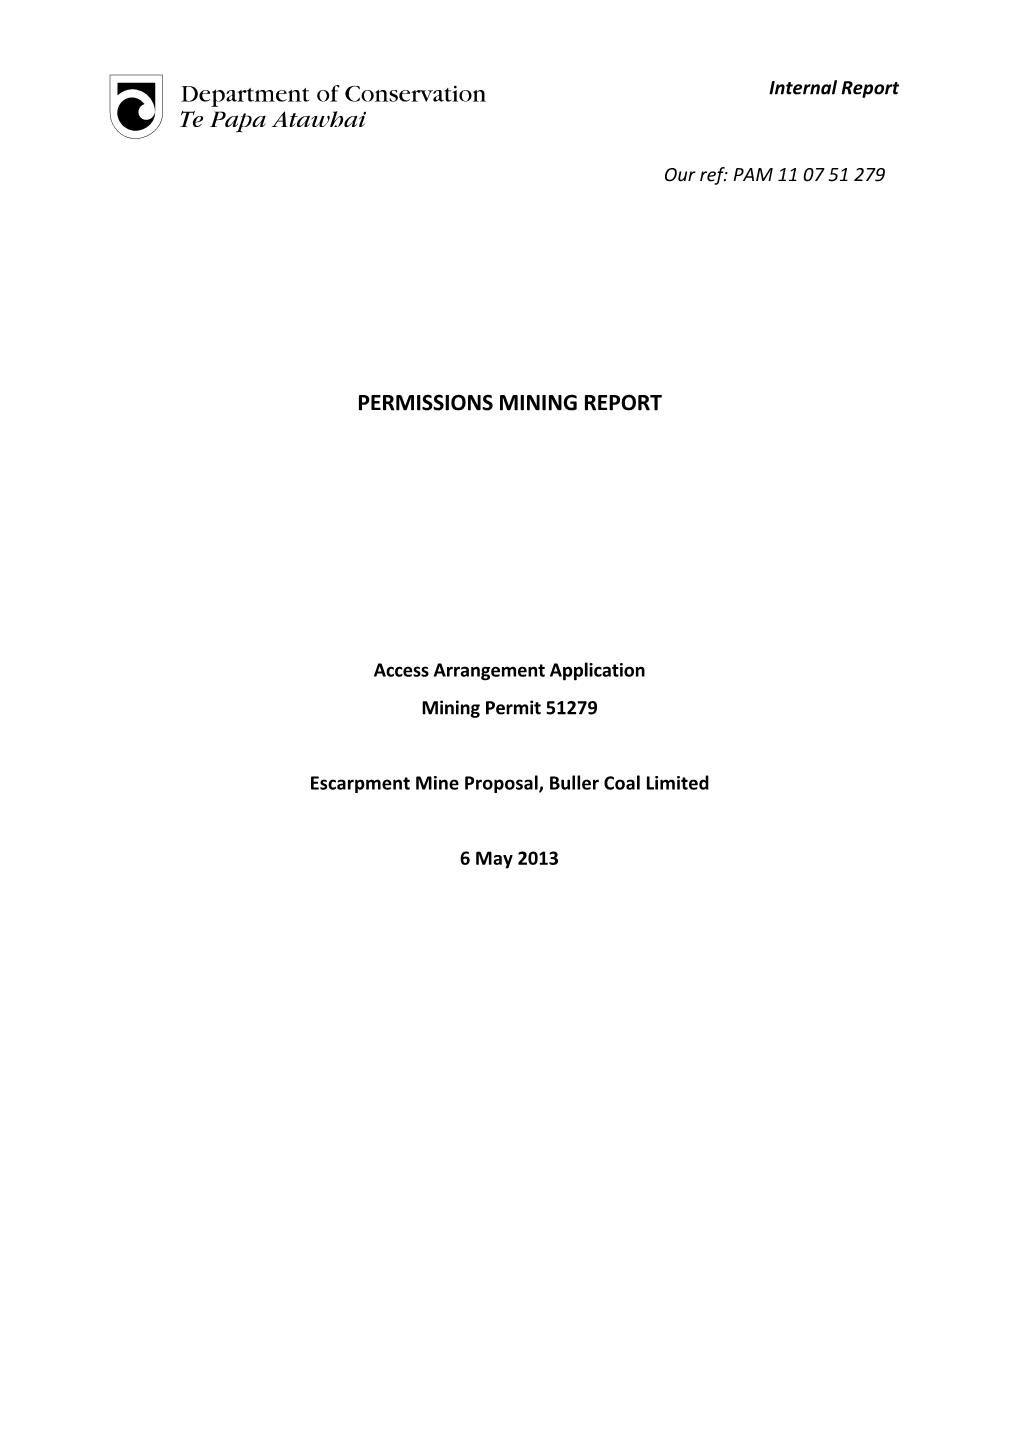 Permissions Mining Report